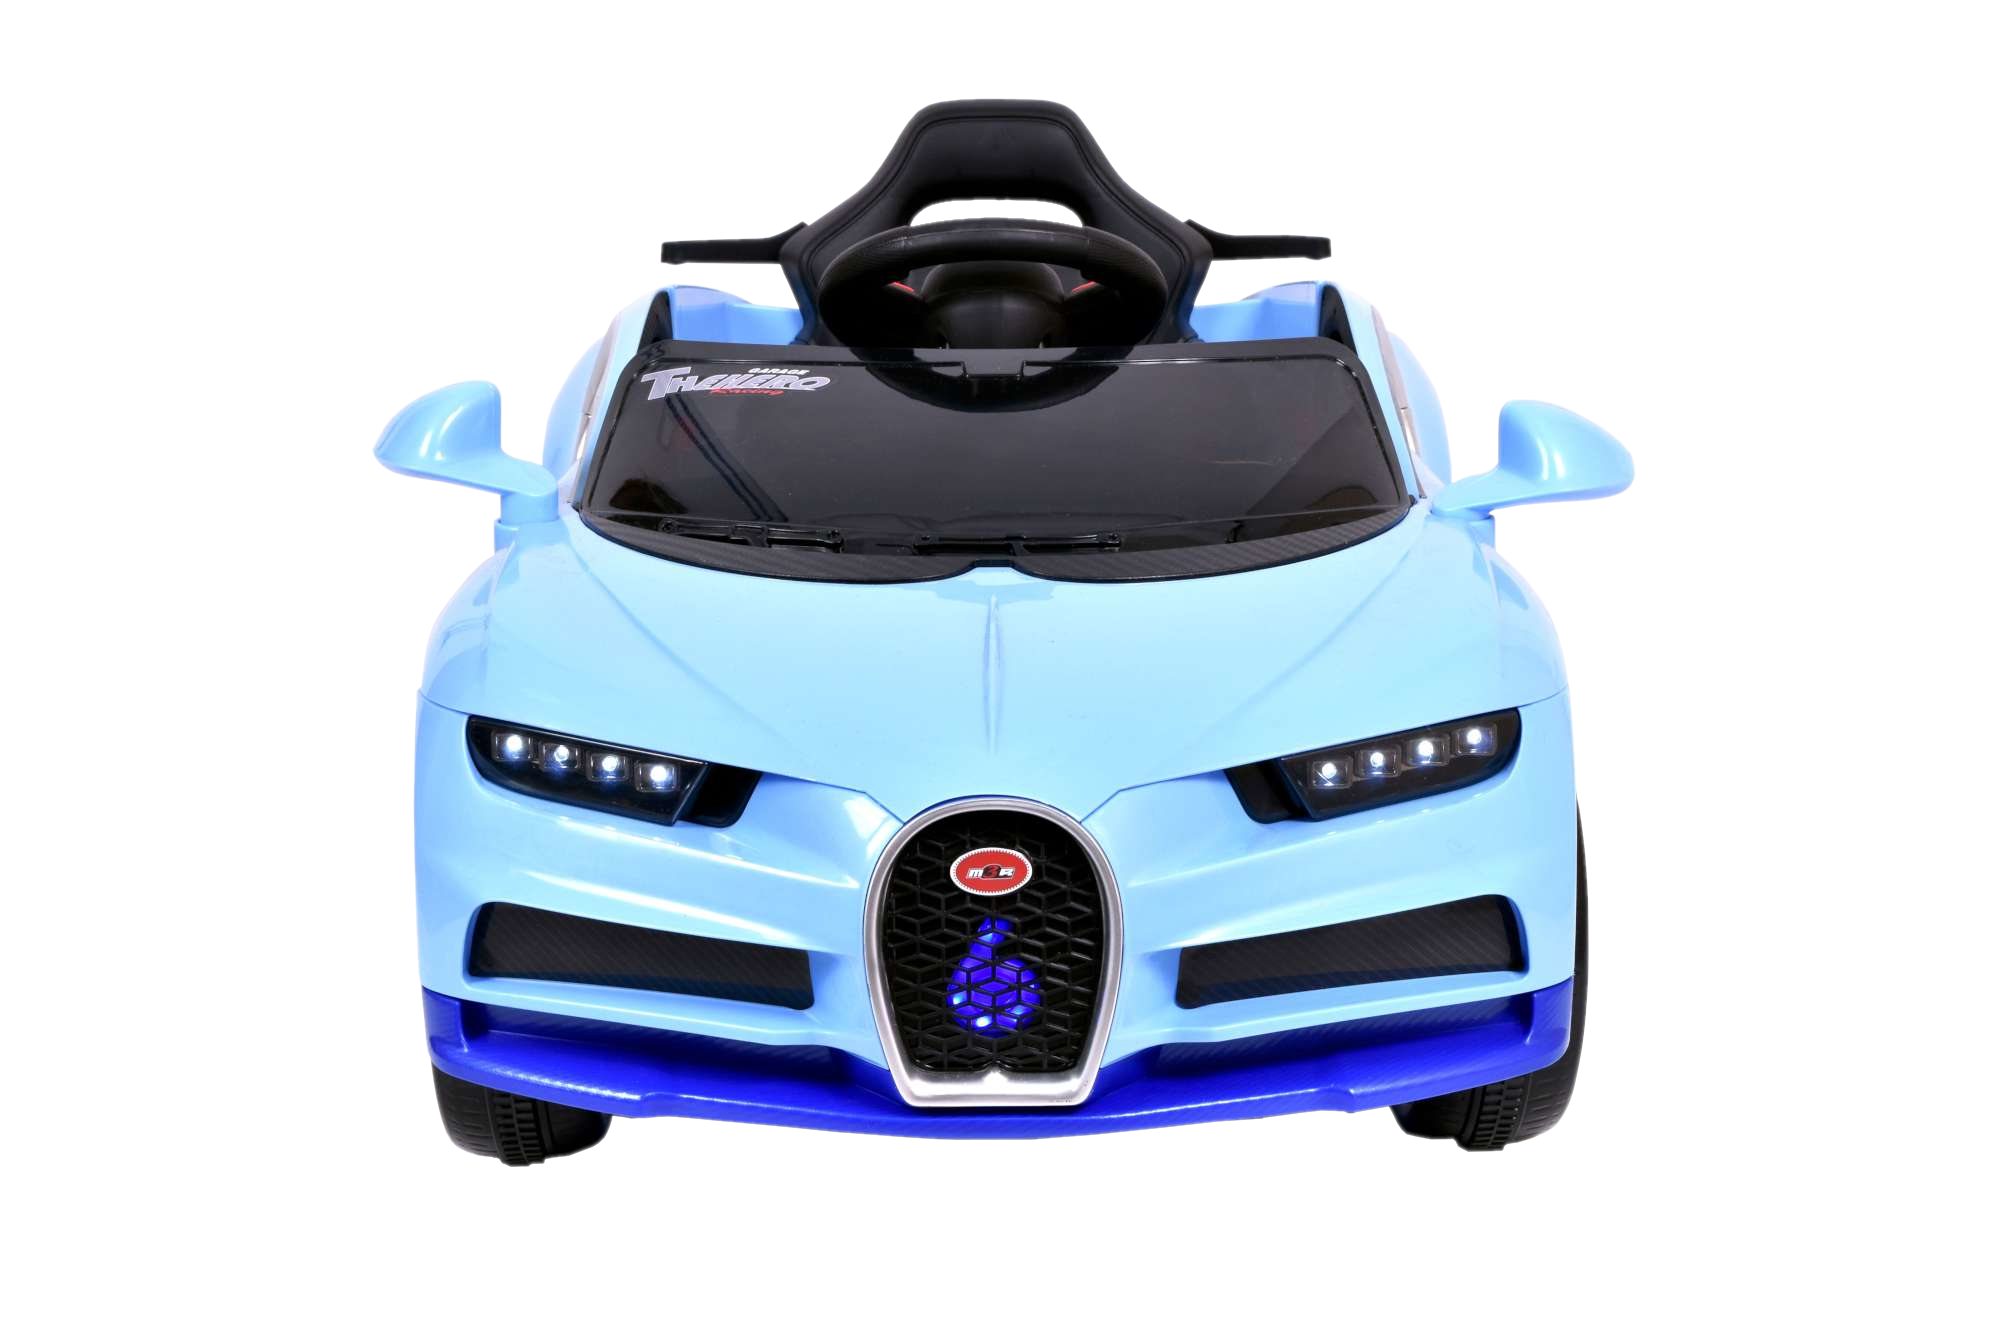 Auto na akumulator Bugatti niebieski